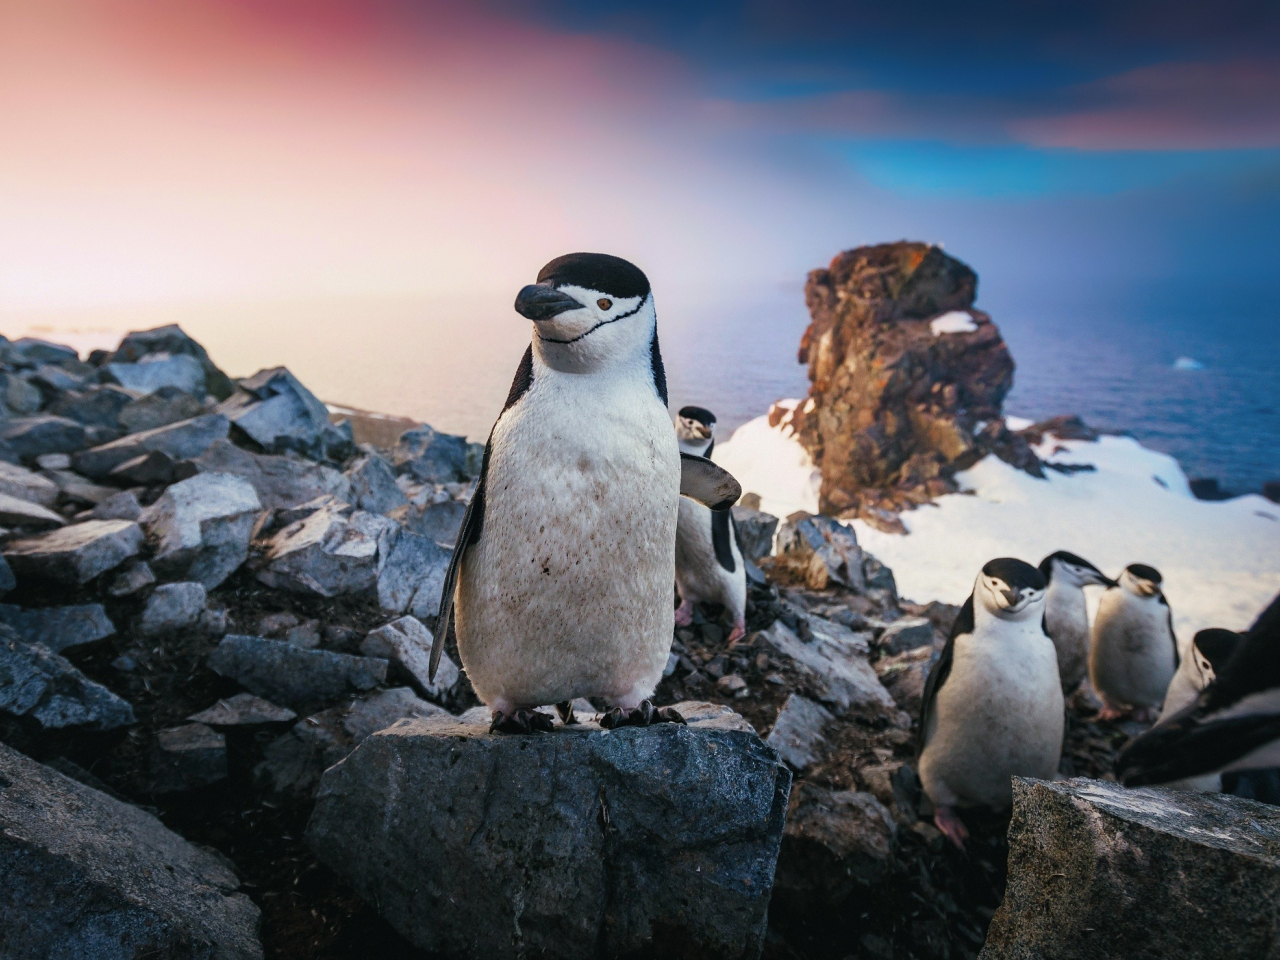 Download wallpaper 1280x960 penguin, coast, rocks, animals, standard 4:3  fullscreen 1280x960 hd background, 3042